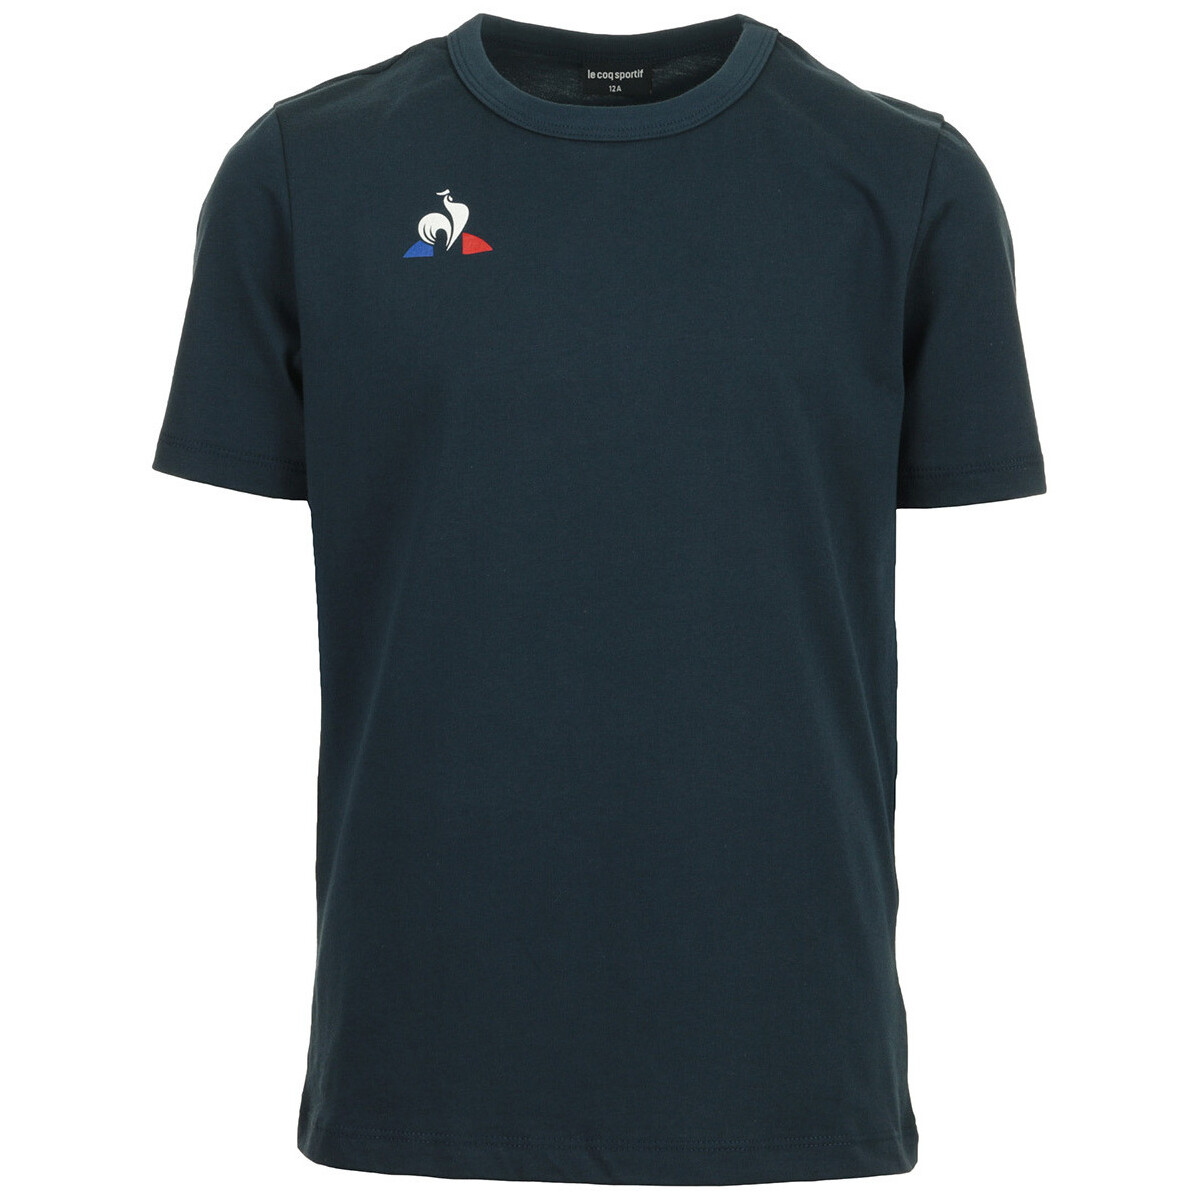 Vêtements Garçon T-shirts manches courtes Le Coq Sportif Tee Ss Presentation Bleu